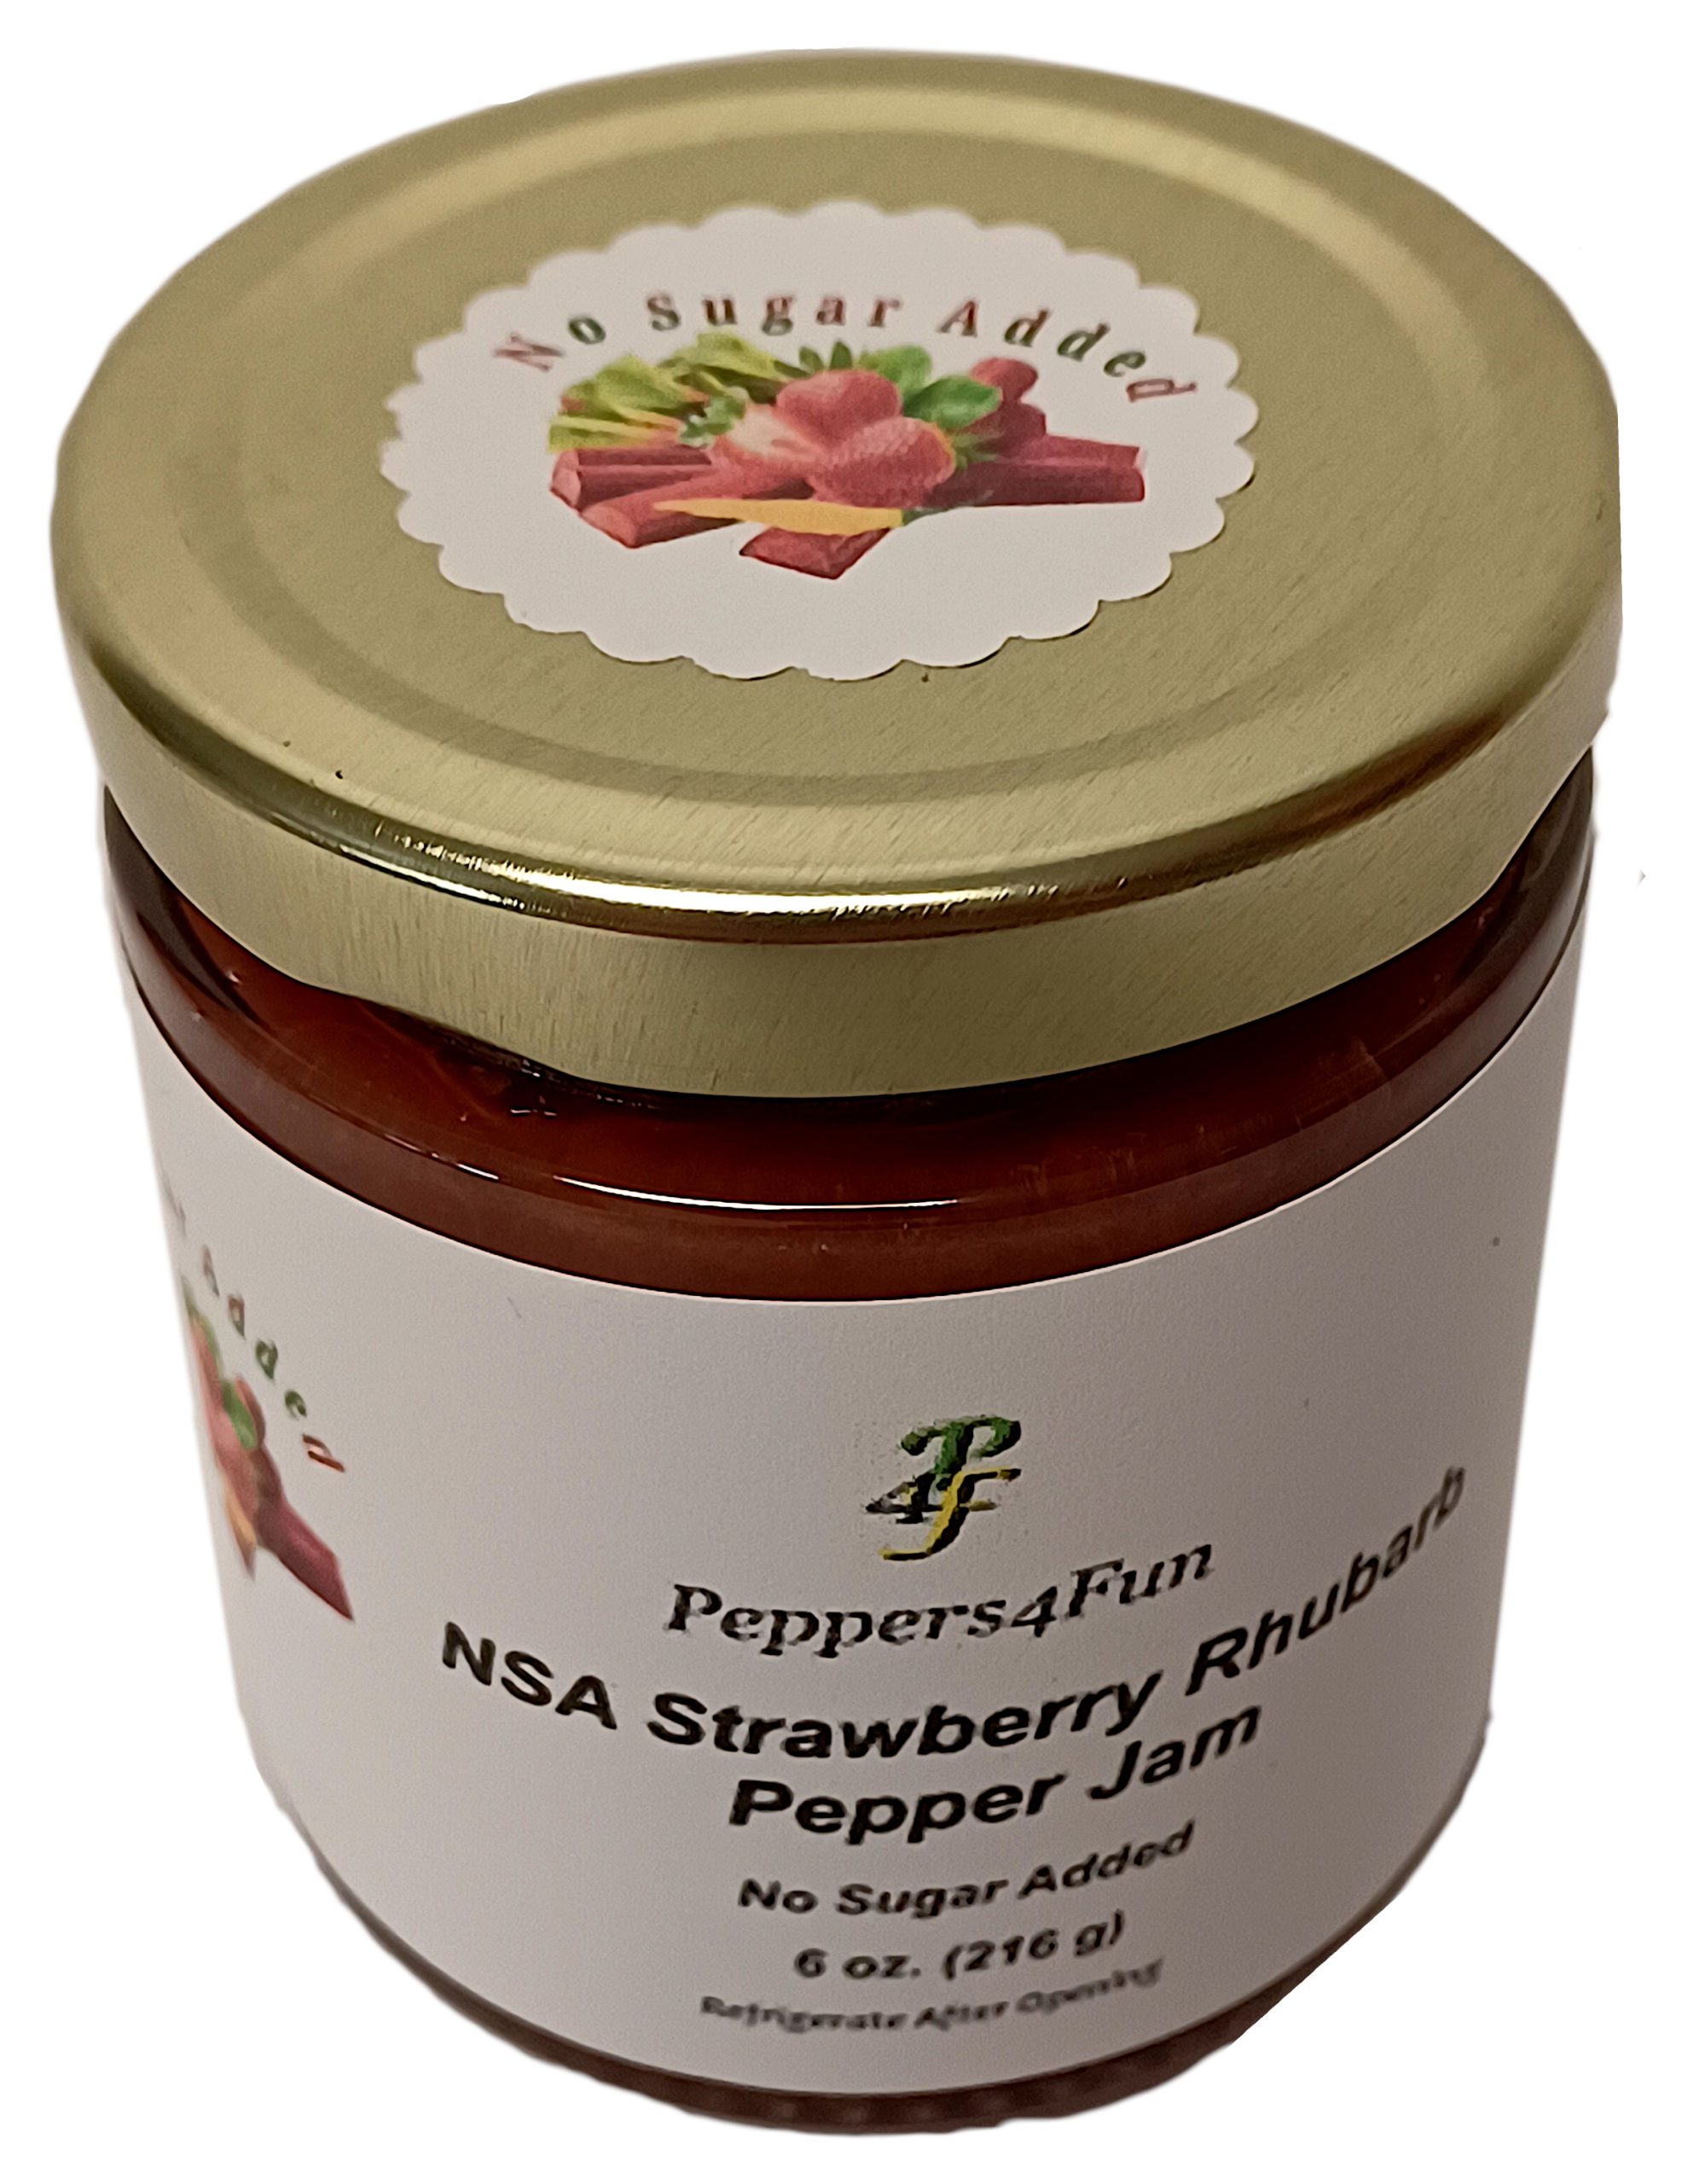 NSA Strawberry Rhubarb Pepper Jam